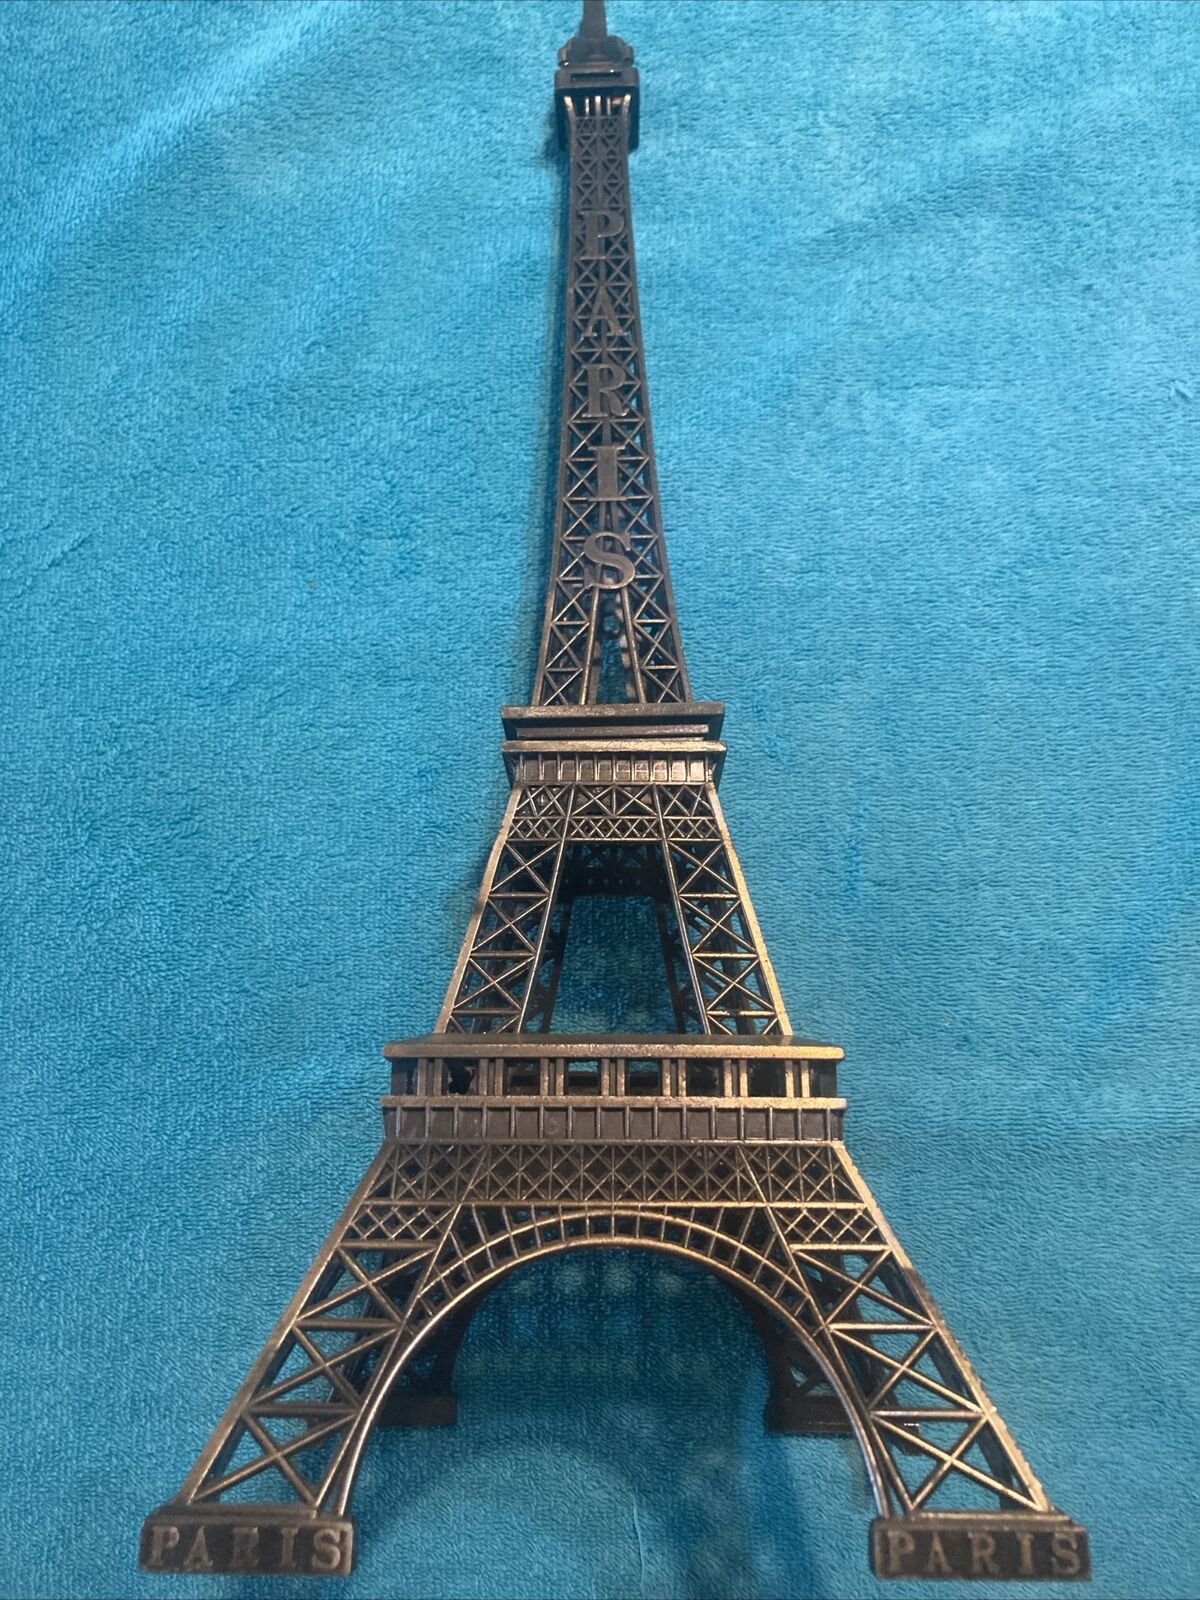 PARIS EIFFEL TOWER VINTAGE STATUE DECOR ALLOY METAL FIGURINE REPLICA 18 1/2”